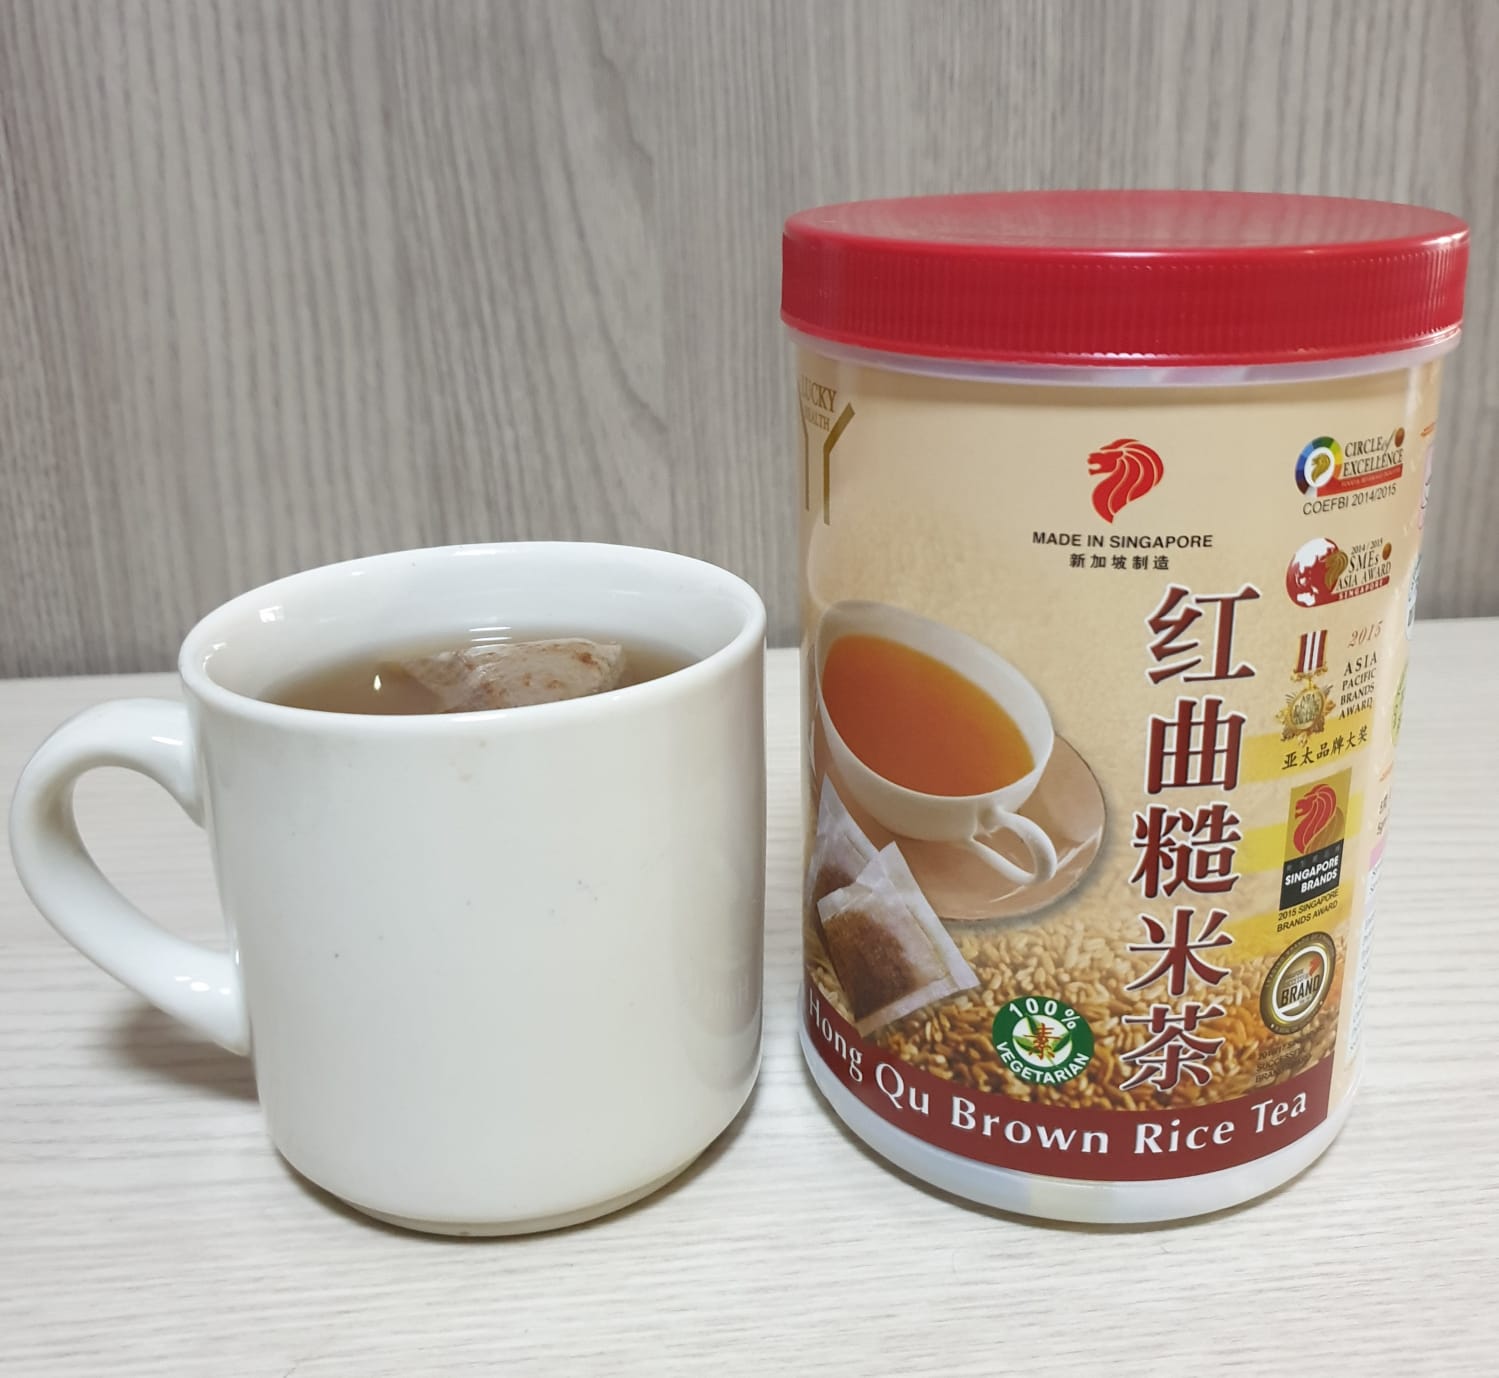 Lucky Health Hong Qu Brown Rice Tea